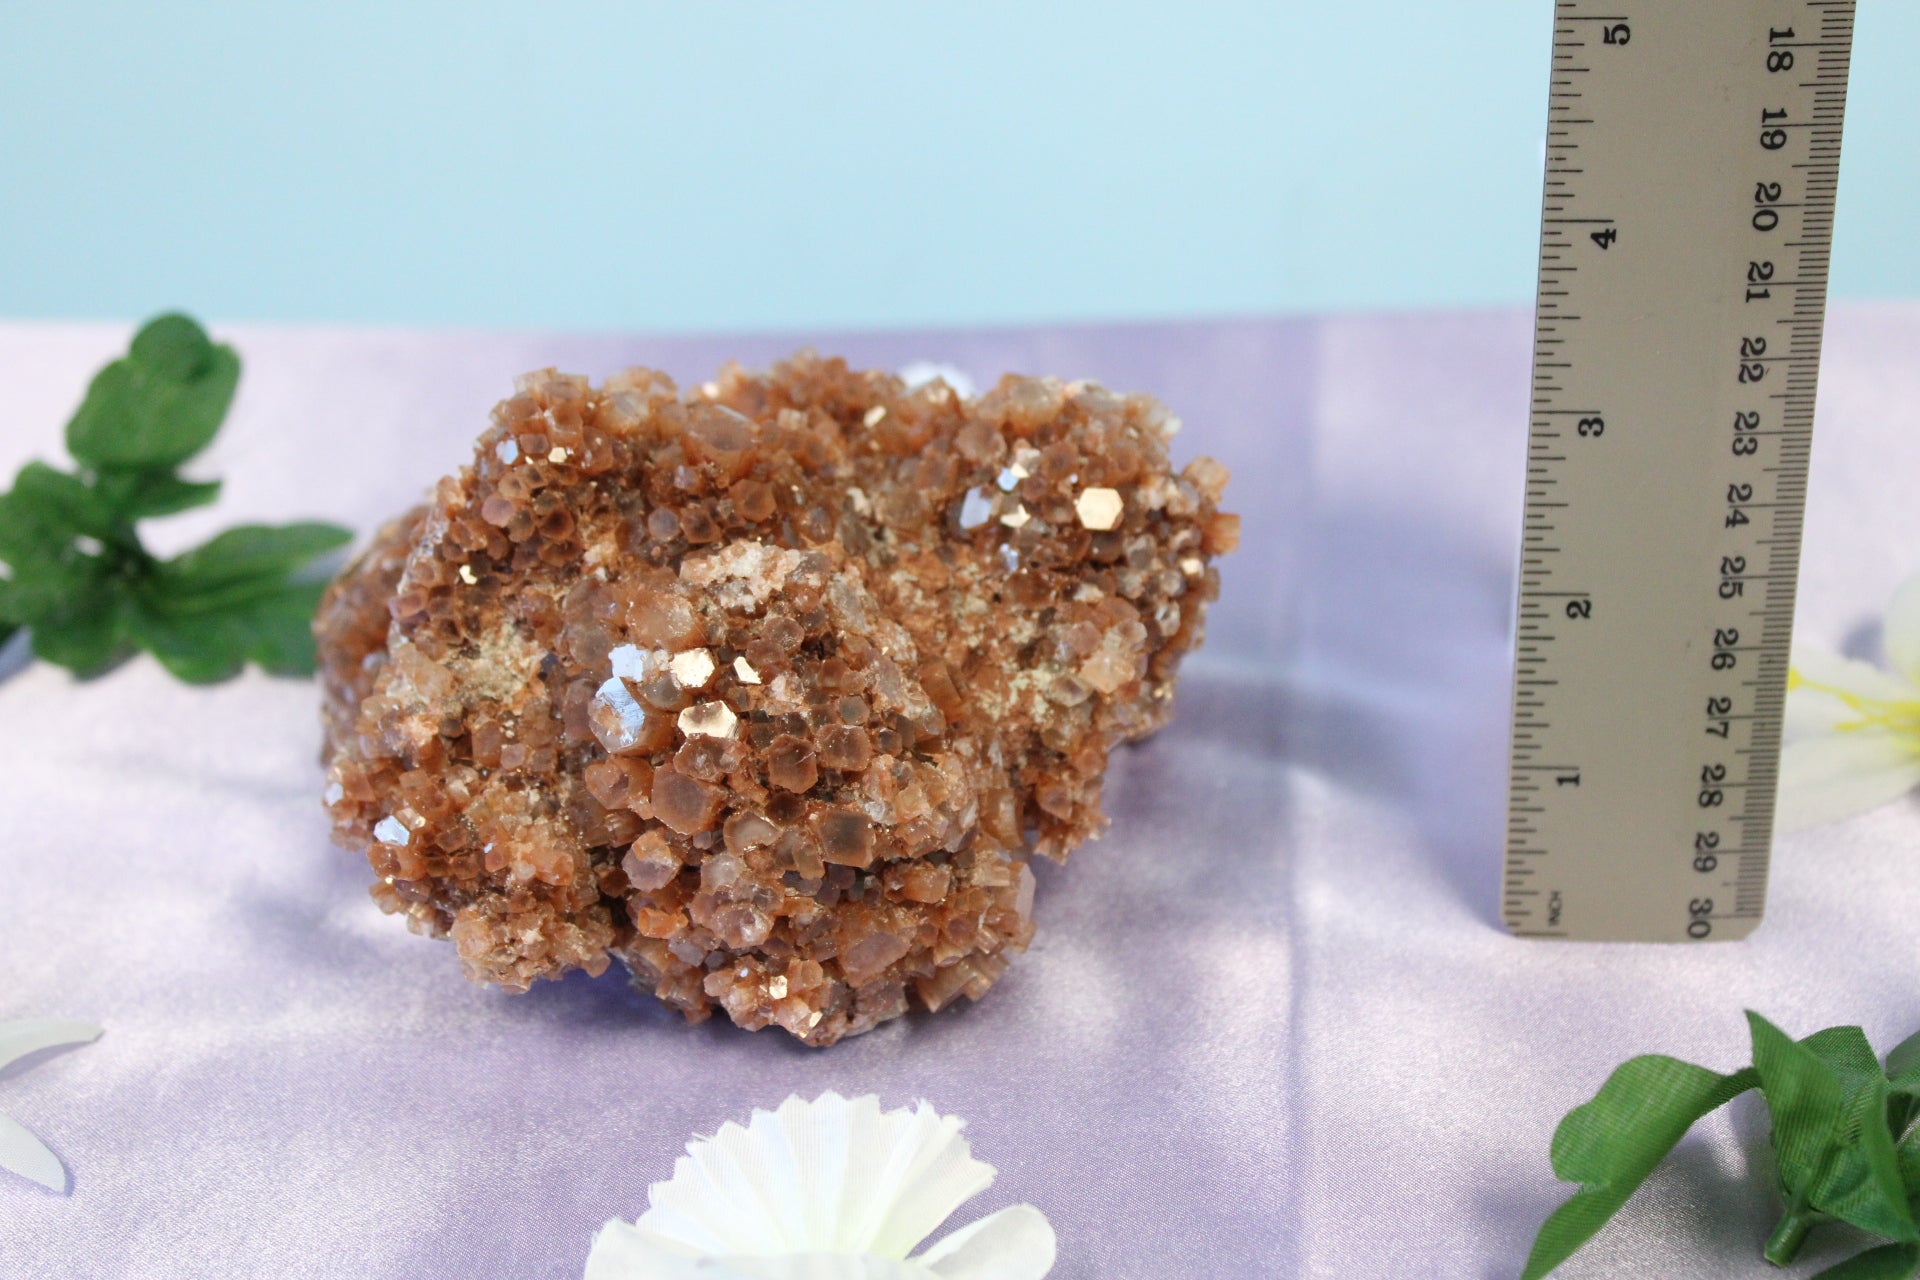 Aragonite Crystal Cluster